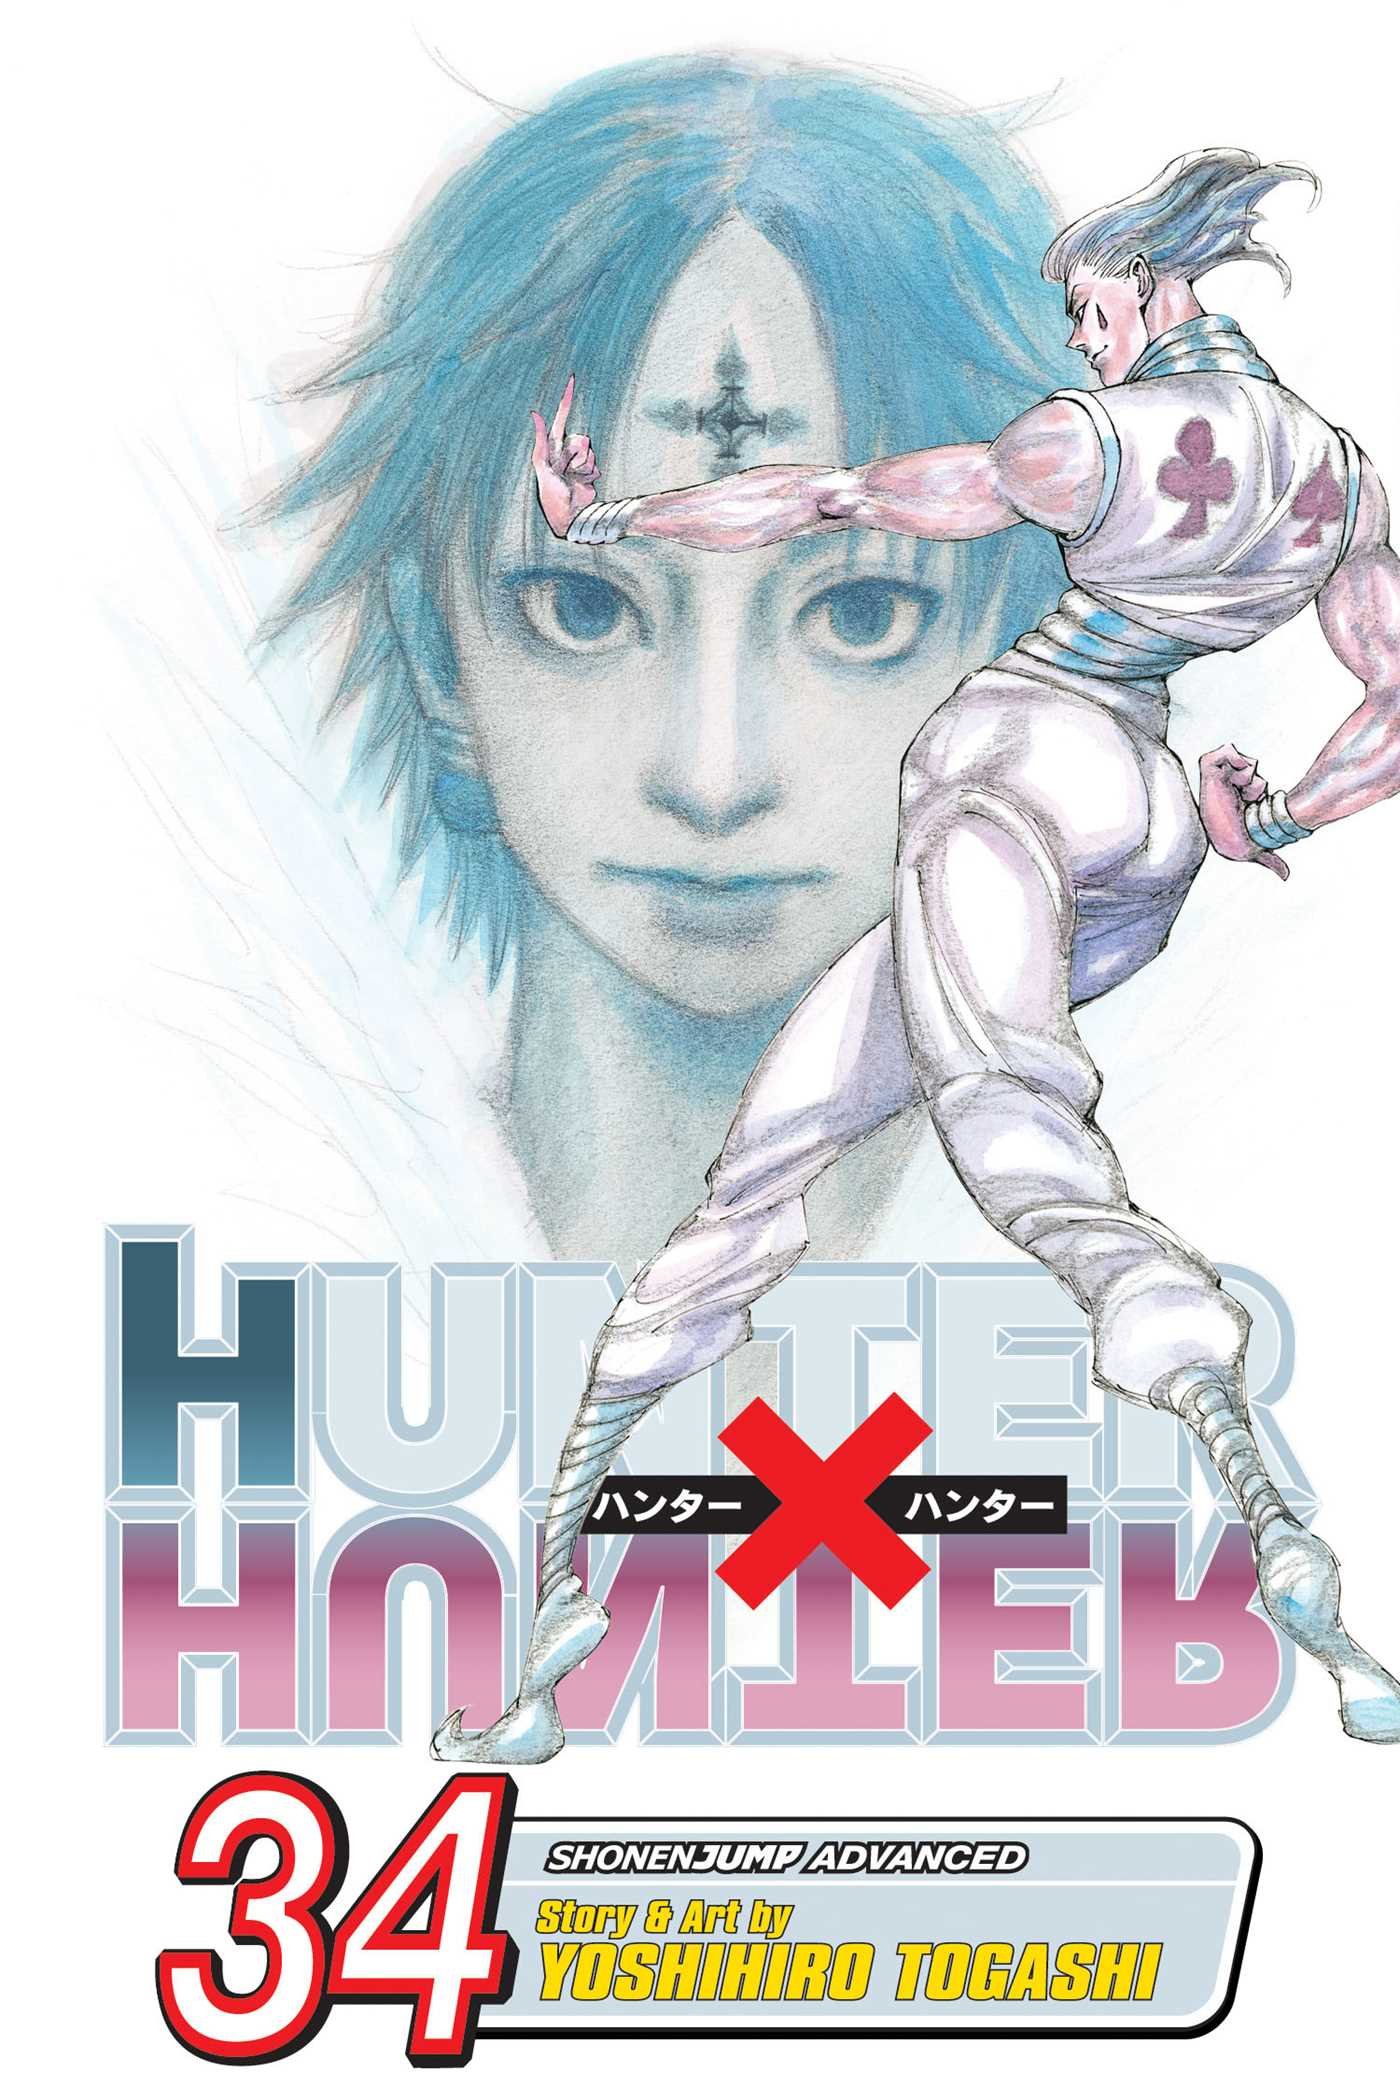 Hunter x Hunter Author Togashi Posts on Social Media Again